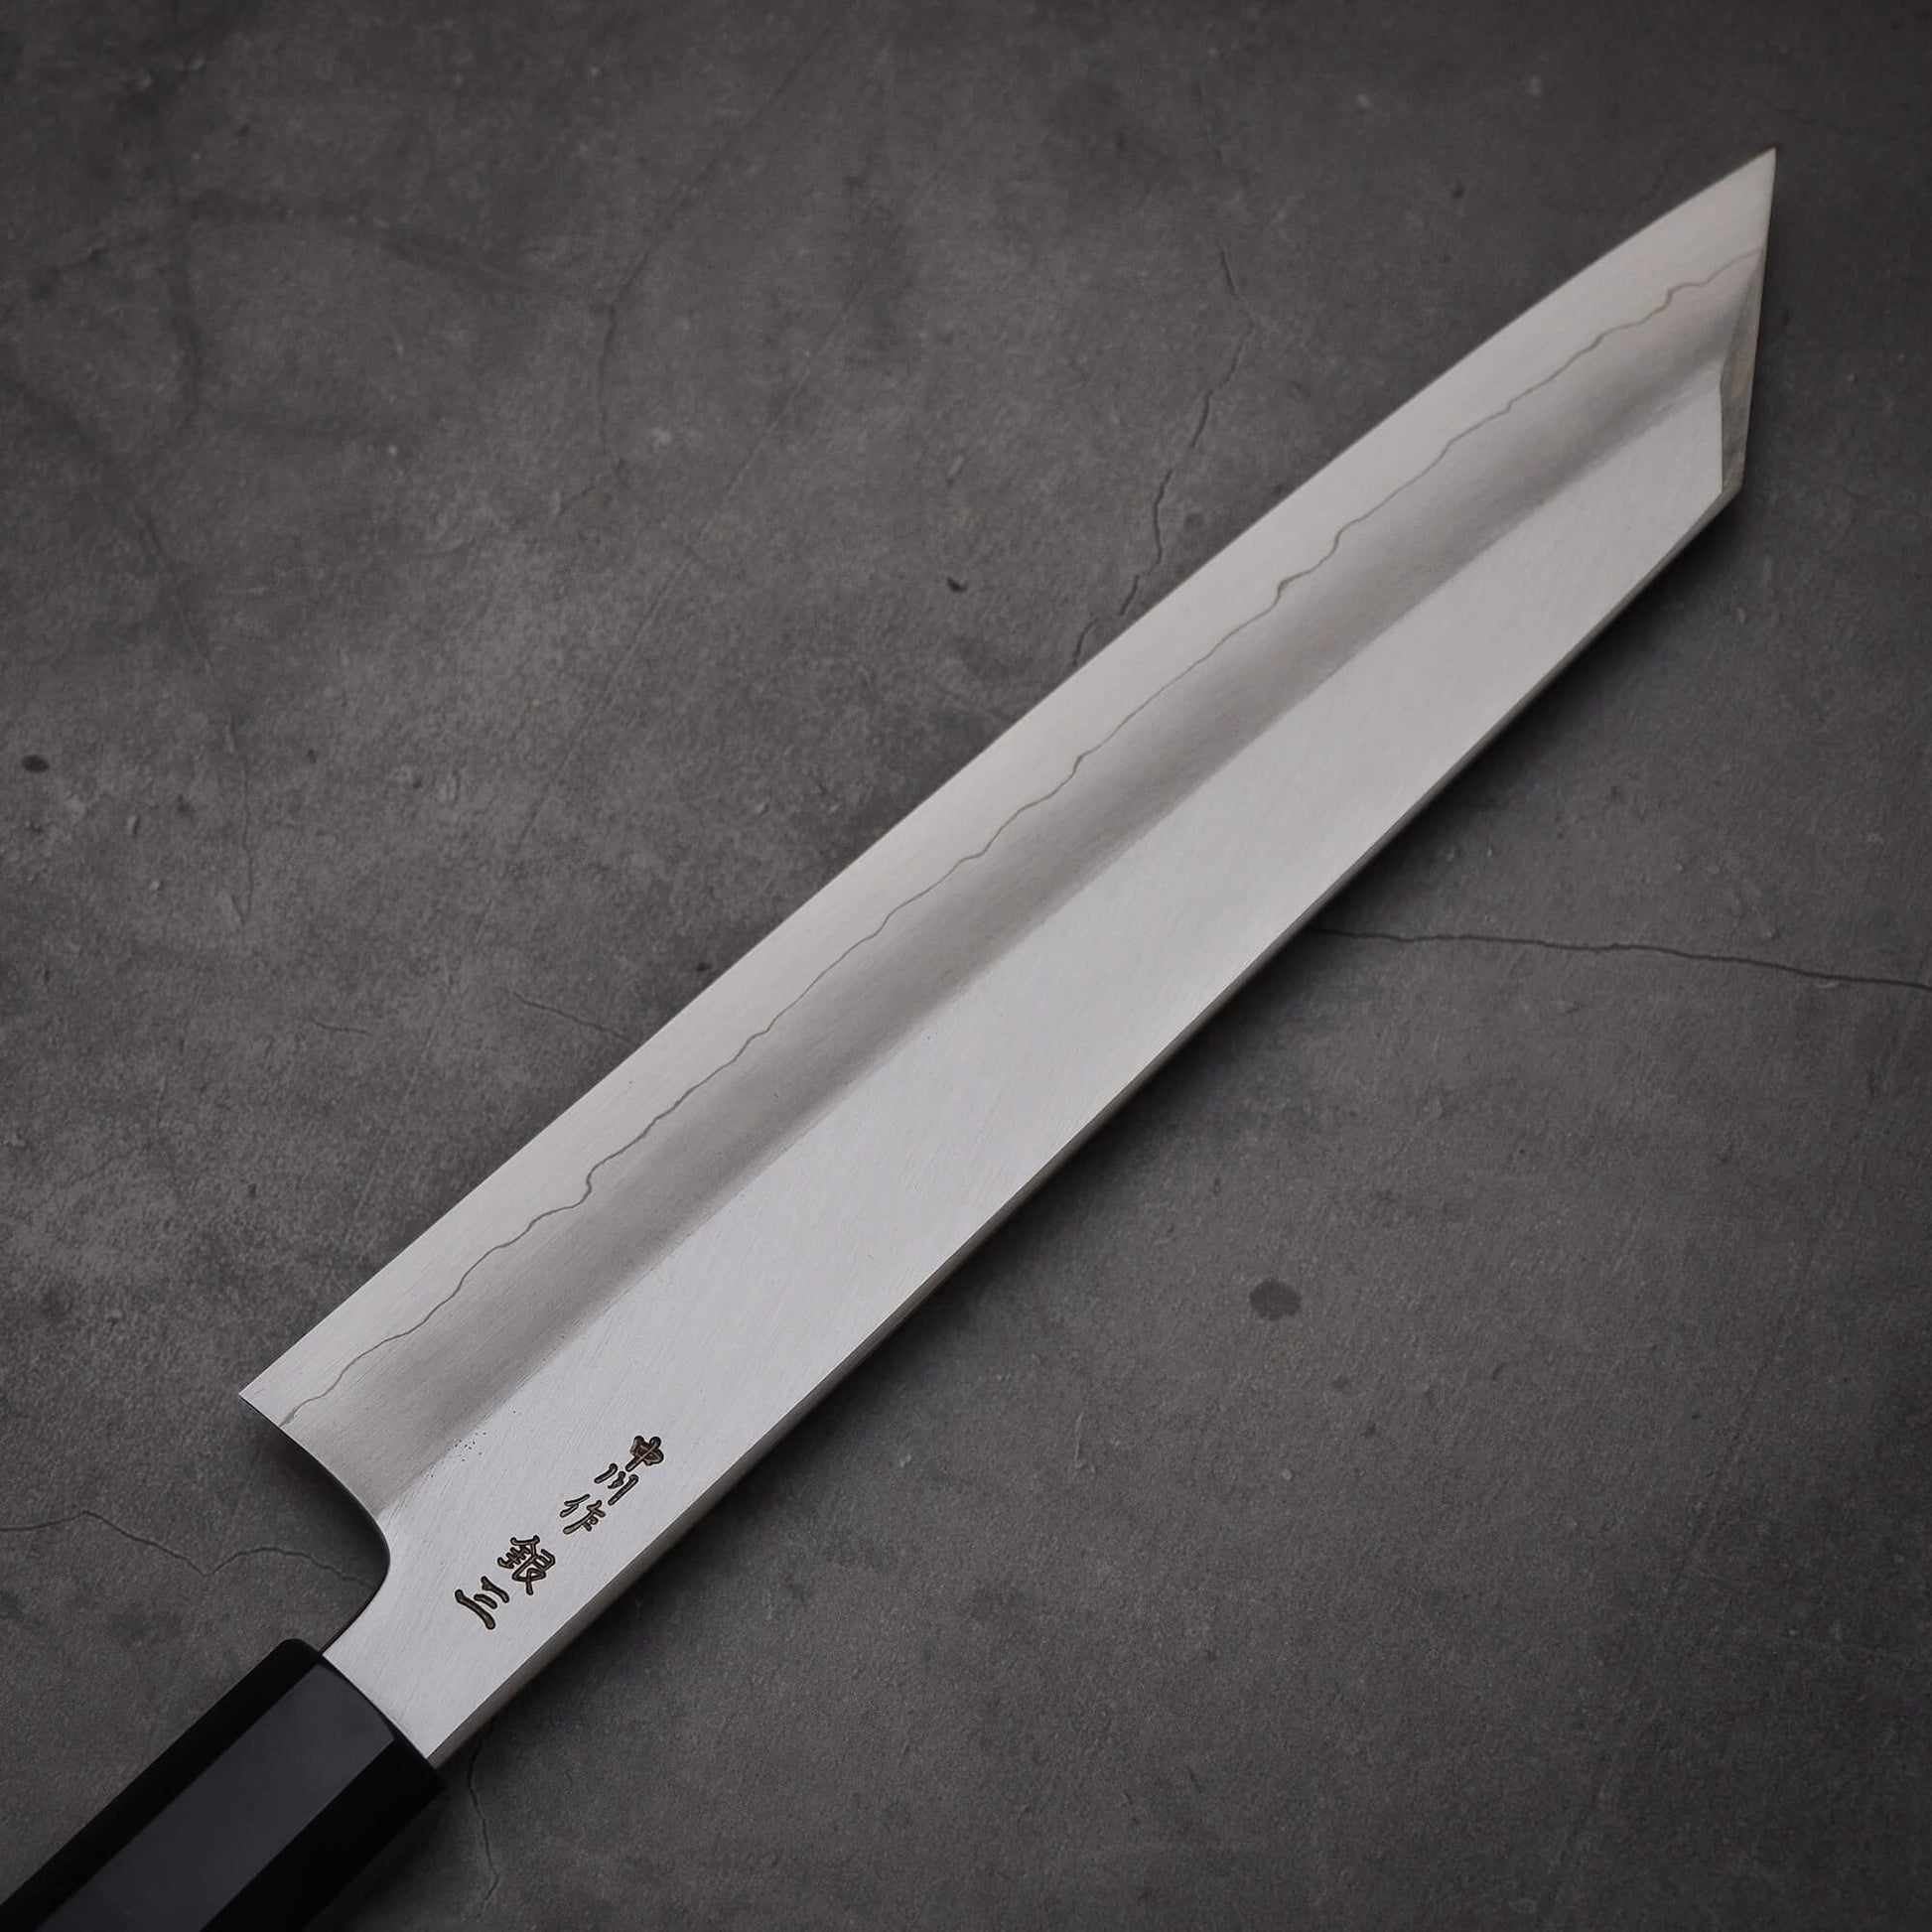 Close up view of the blade of Hatsukokoro Nakagawa ginsan kiritsuke gyuto knife. Image shows left side of the blade